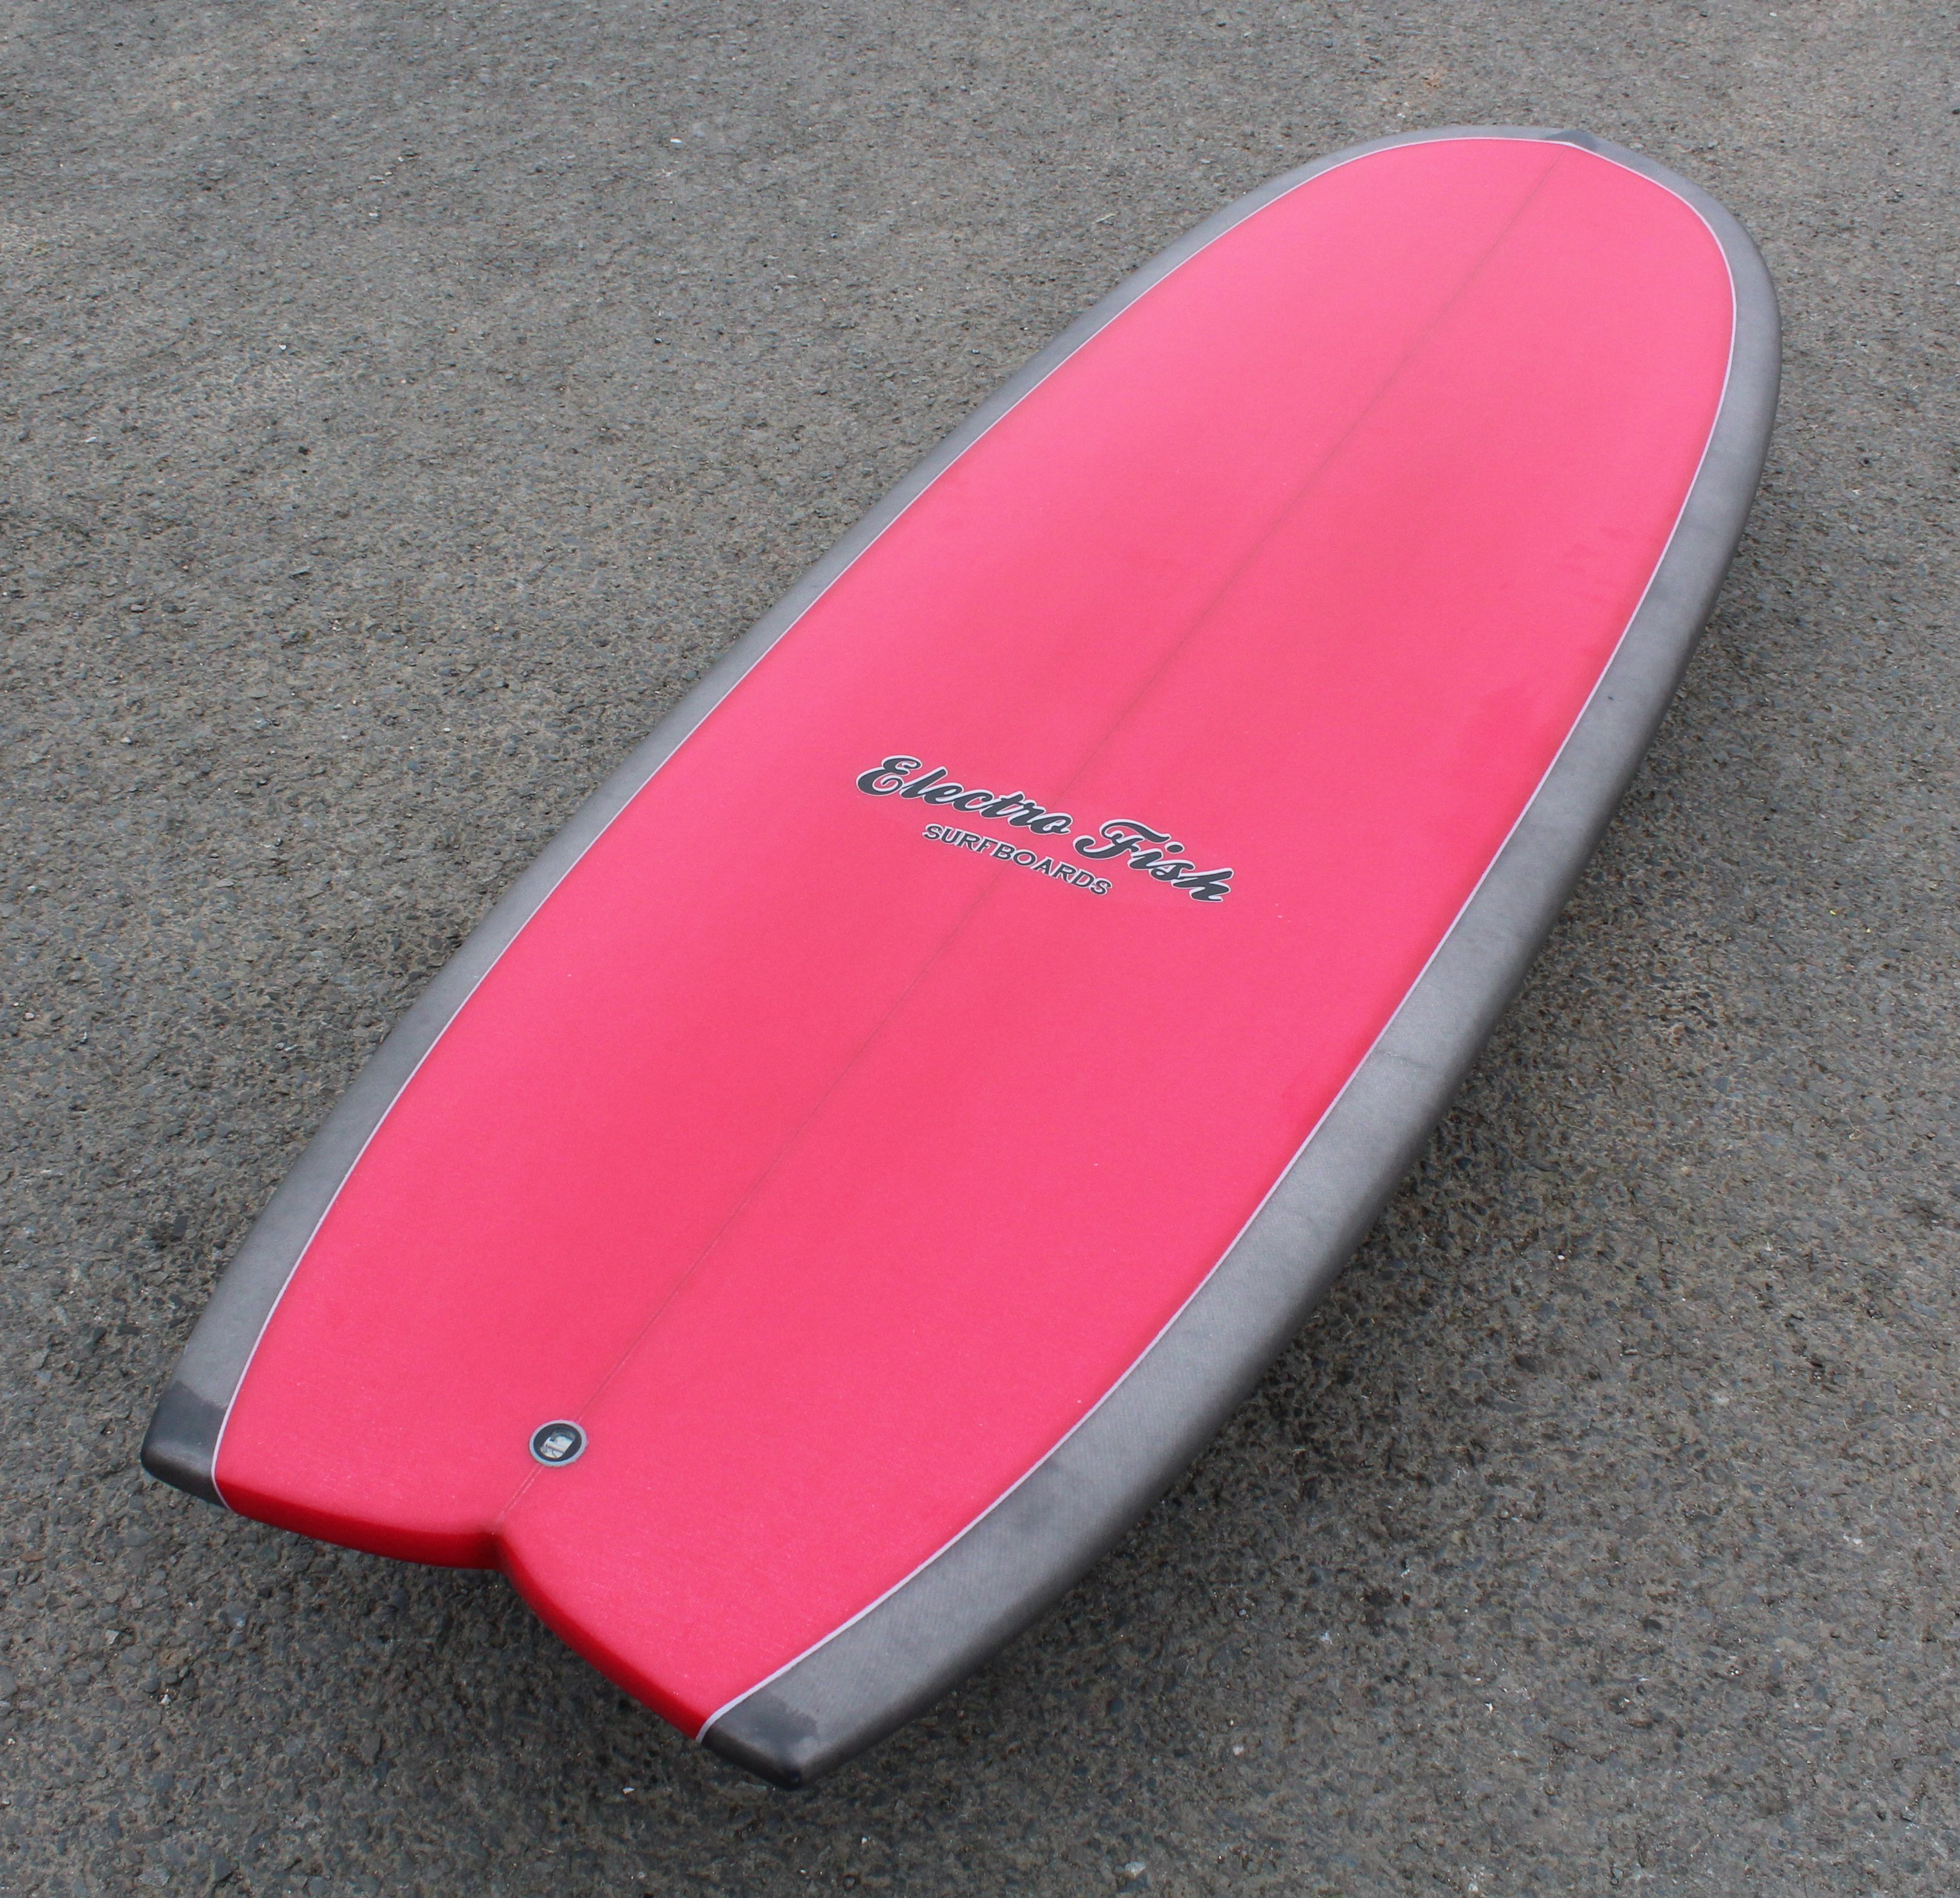 New 54 Puck Model Mini Simmons Quad Surfboard